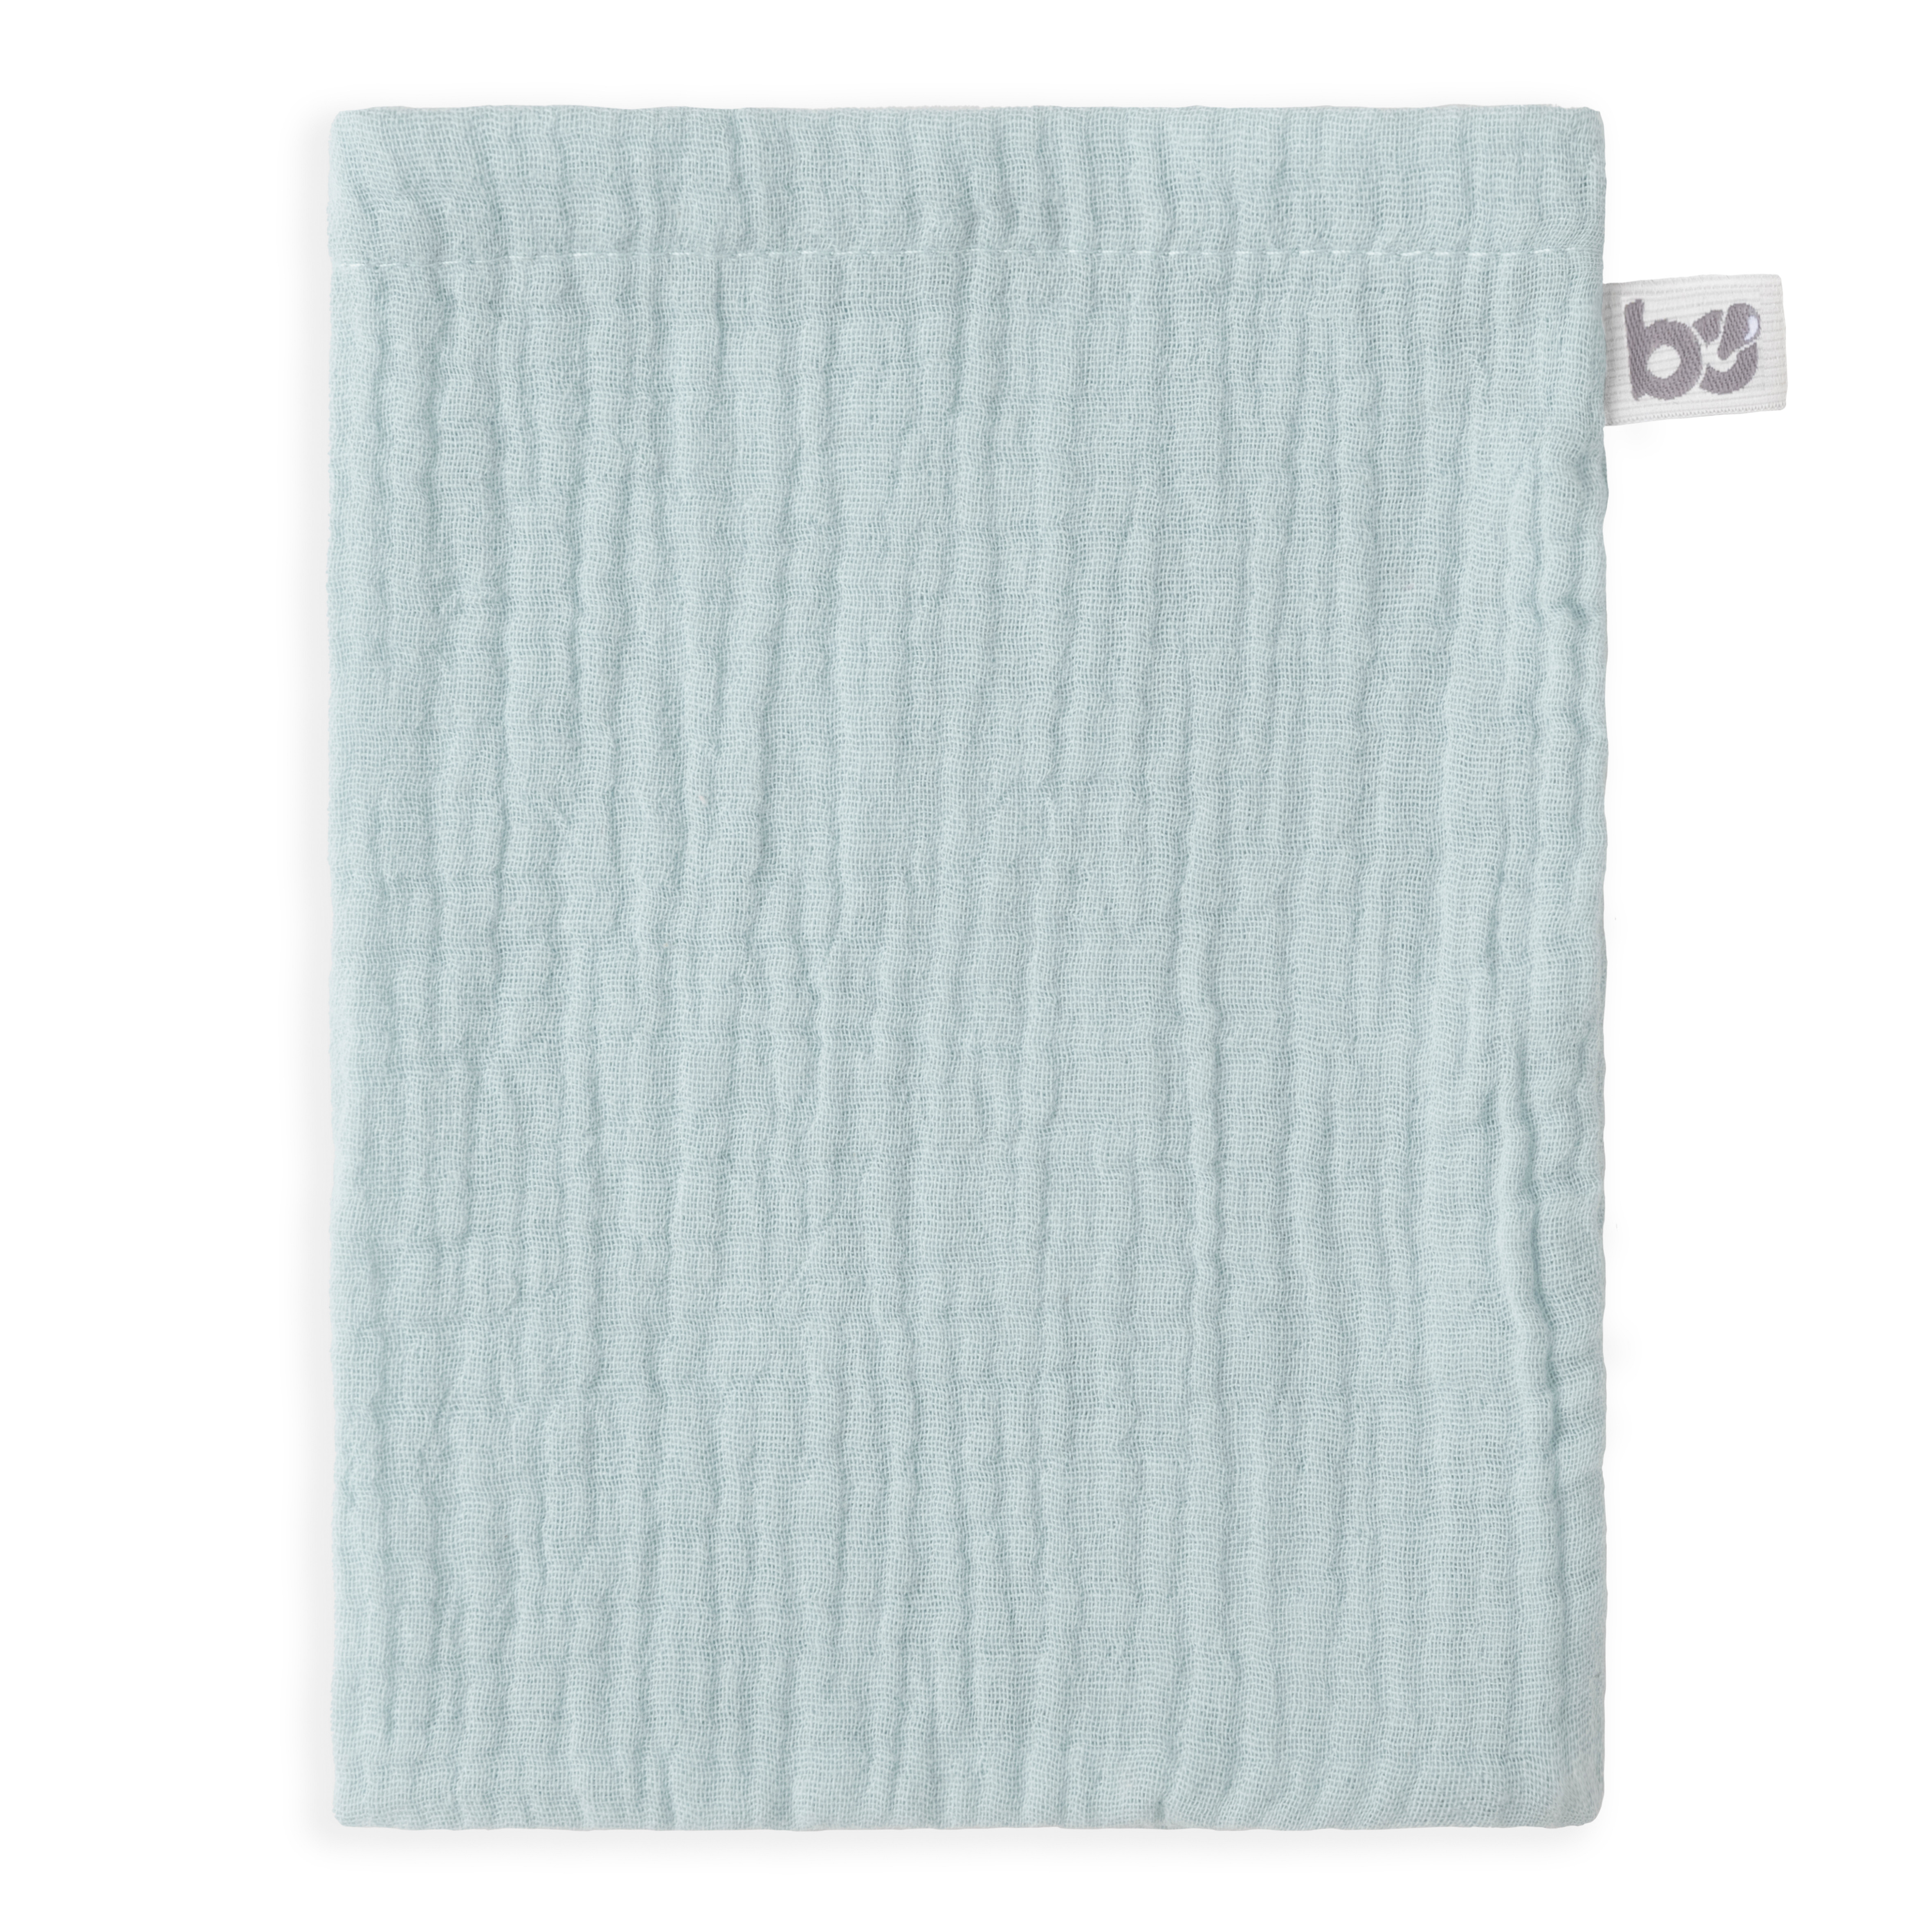 Washcloth Fresh ECO misty blue/urban taupe - 3-pack